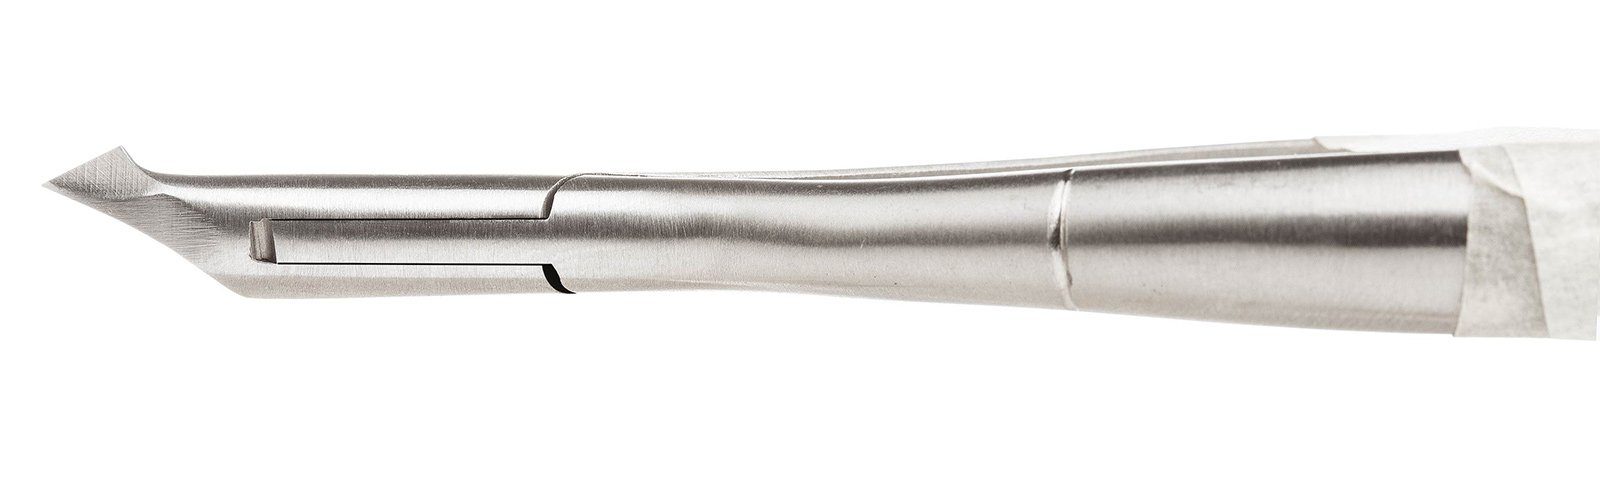 Edelstahl, Nagelhautzange Hautzange Nagelzange Schnitt, Kosmetex 12 3mm aus cm